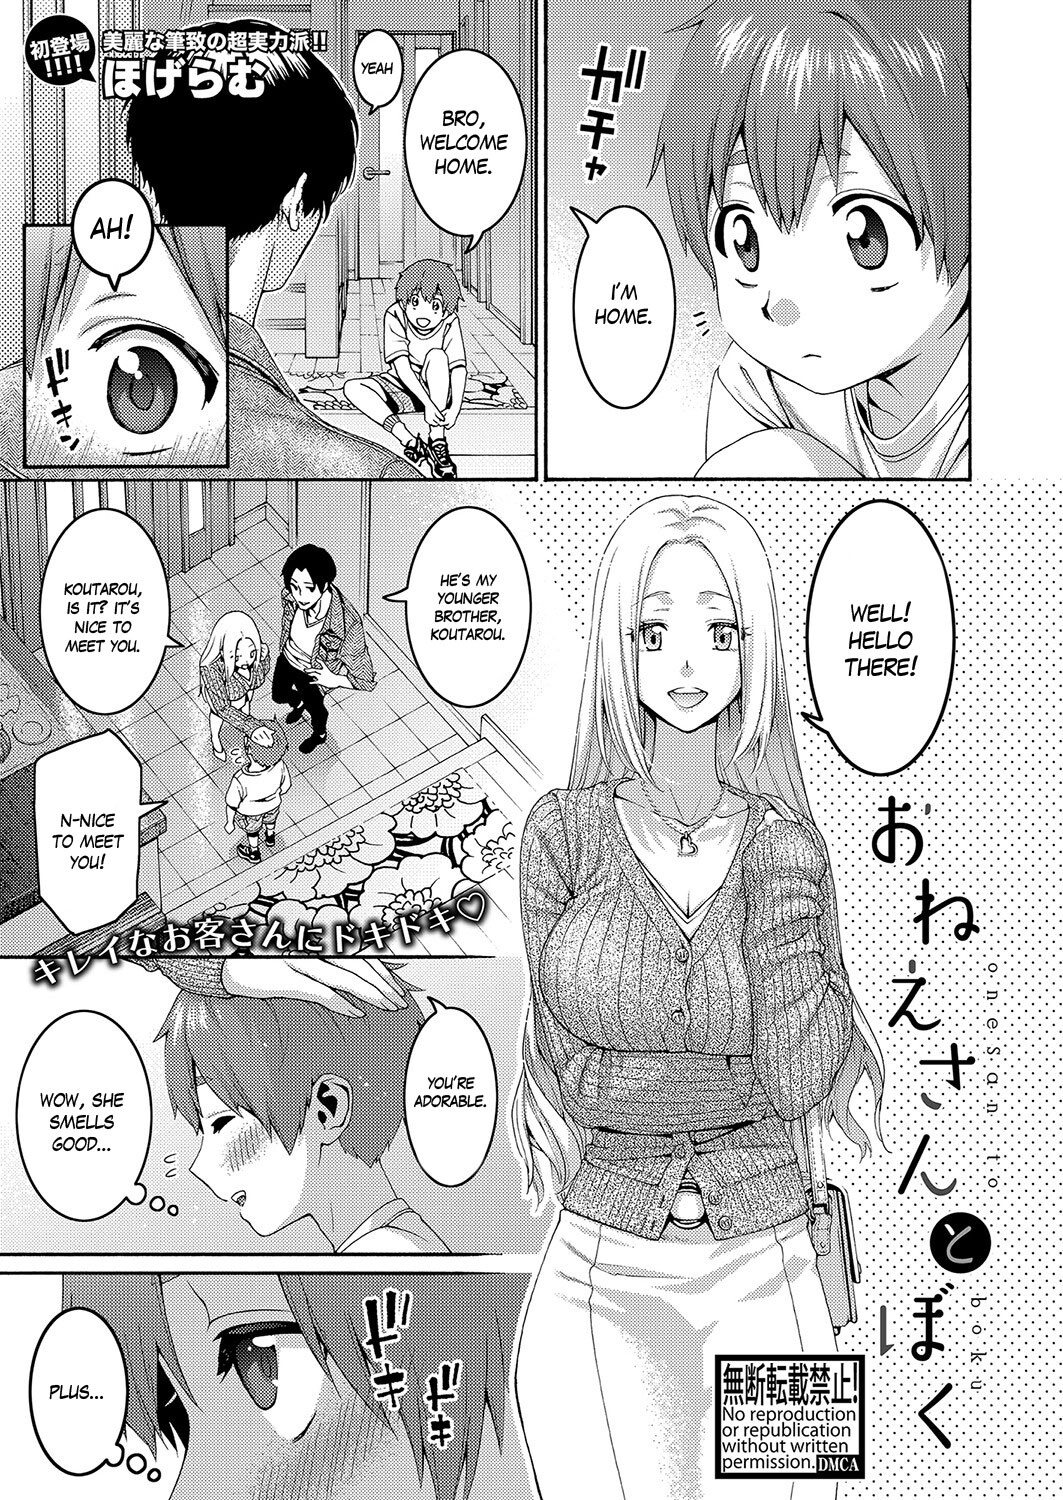 Hentai Manga Comic-Older Sister and Boy-Read-1